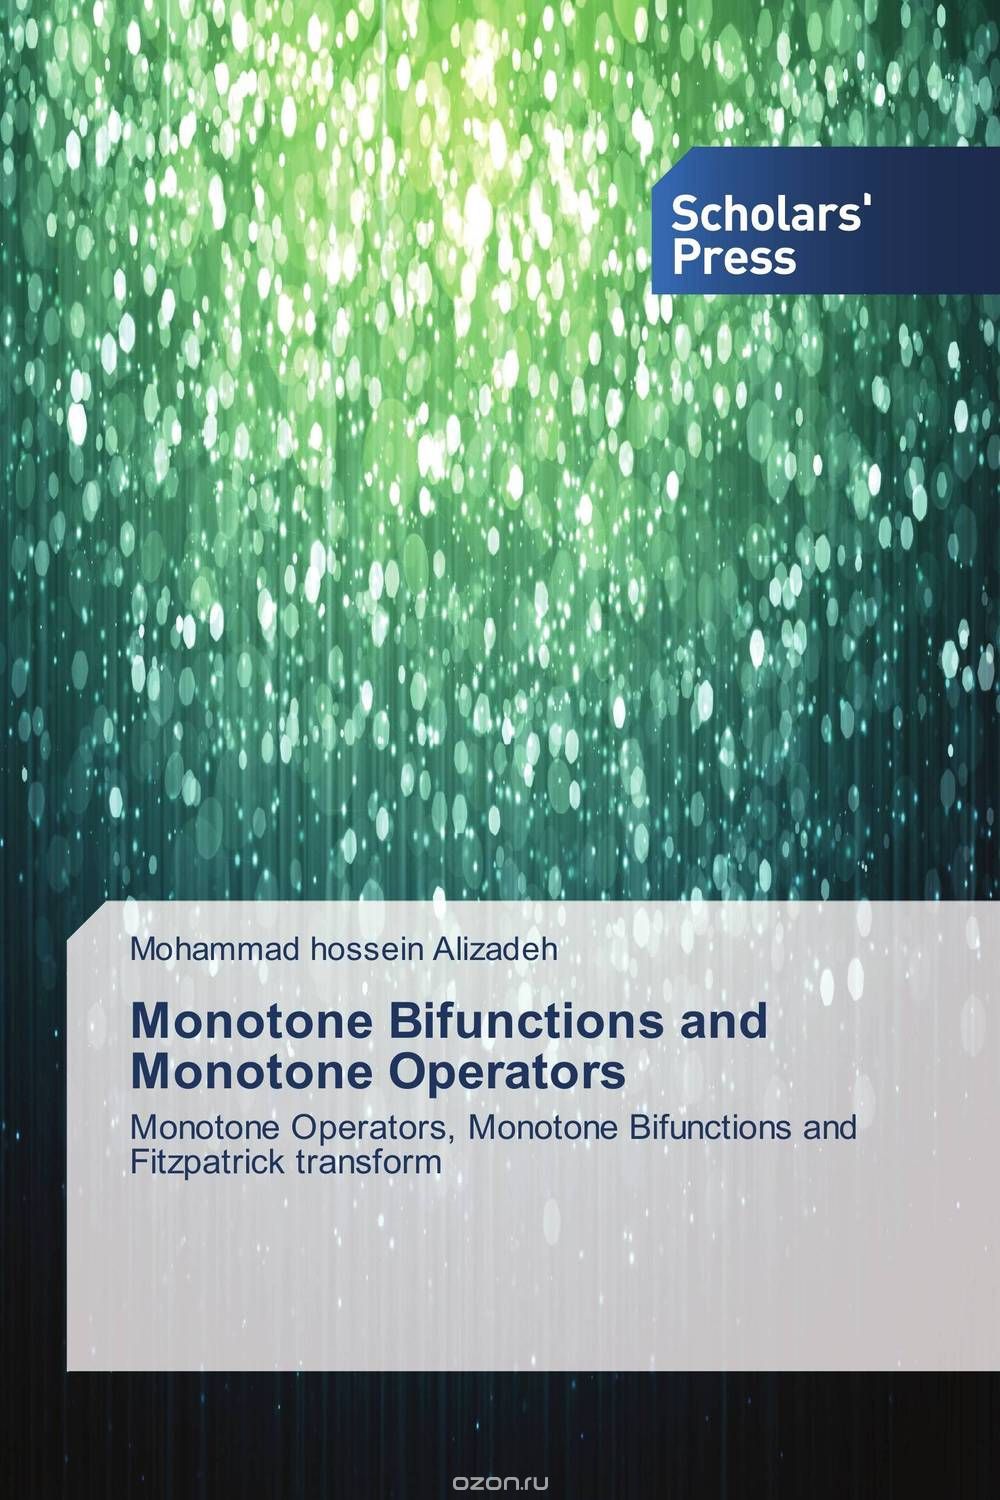 Скачать книгу "Monotone Bifunctions and Monotone Operators"